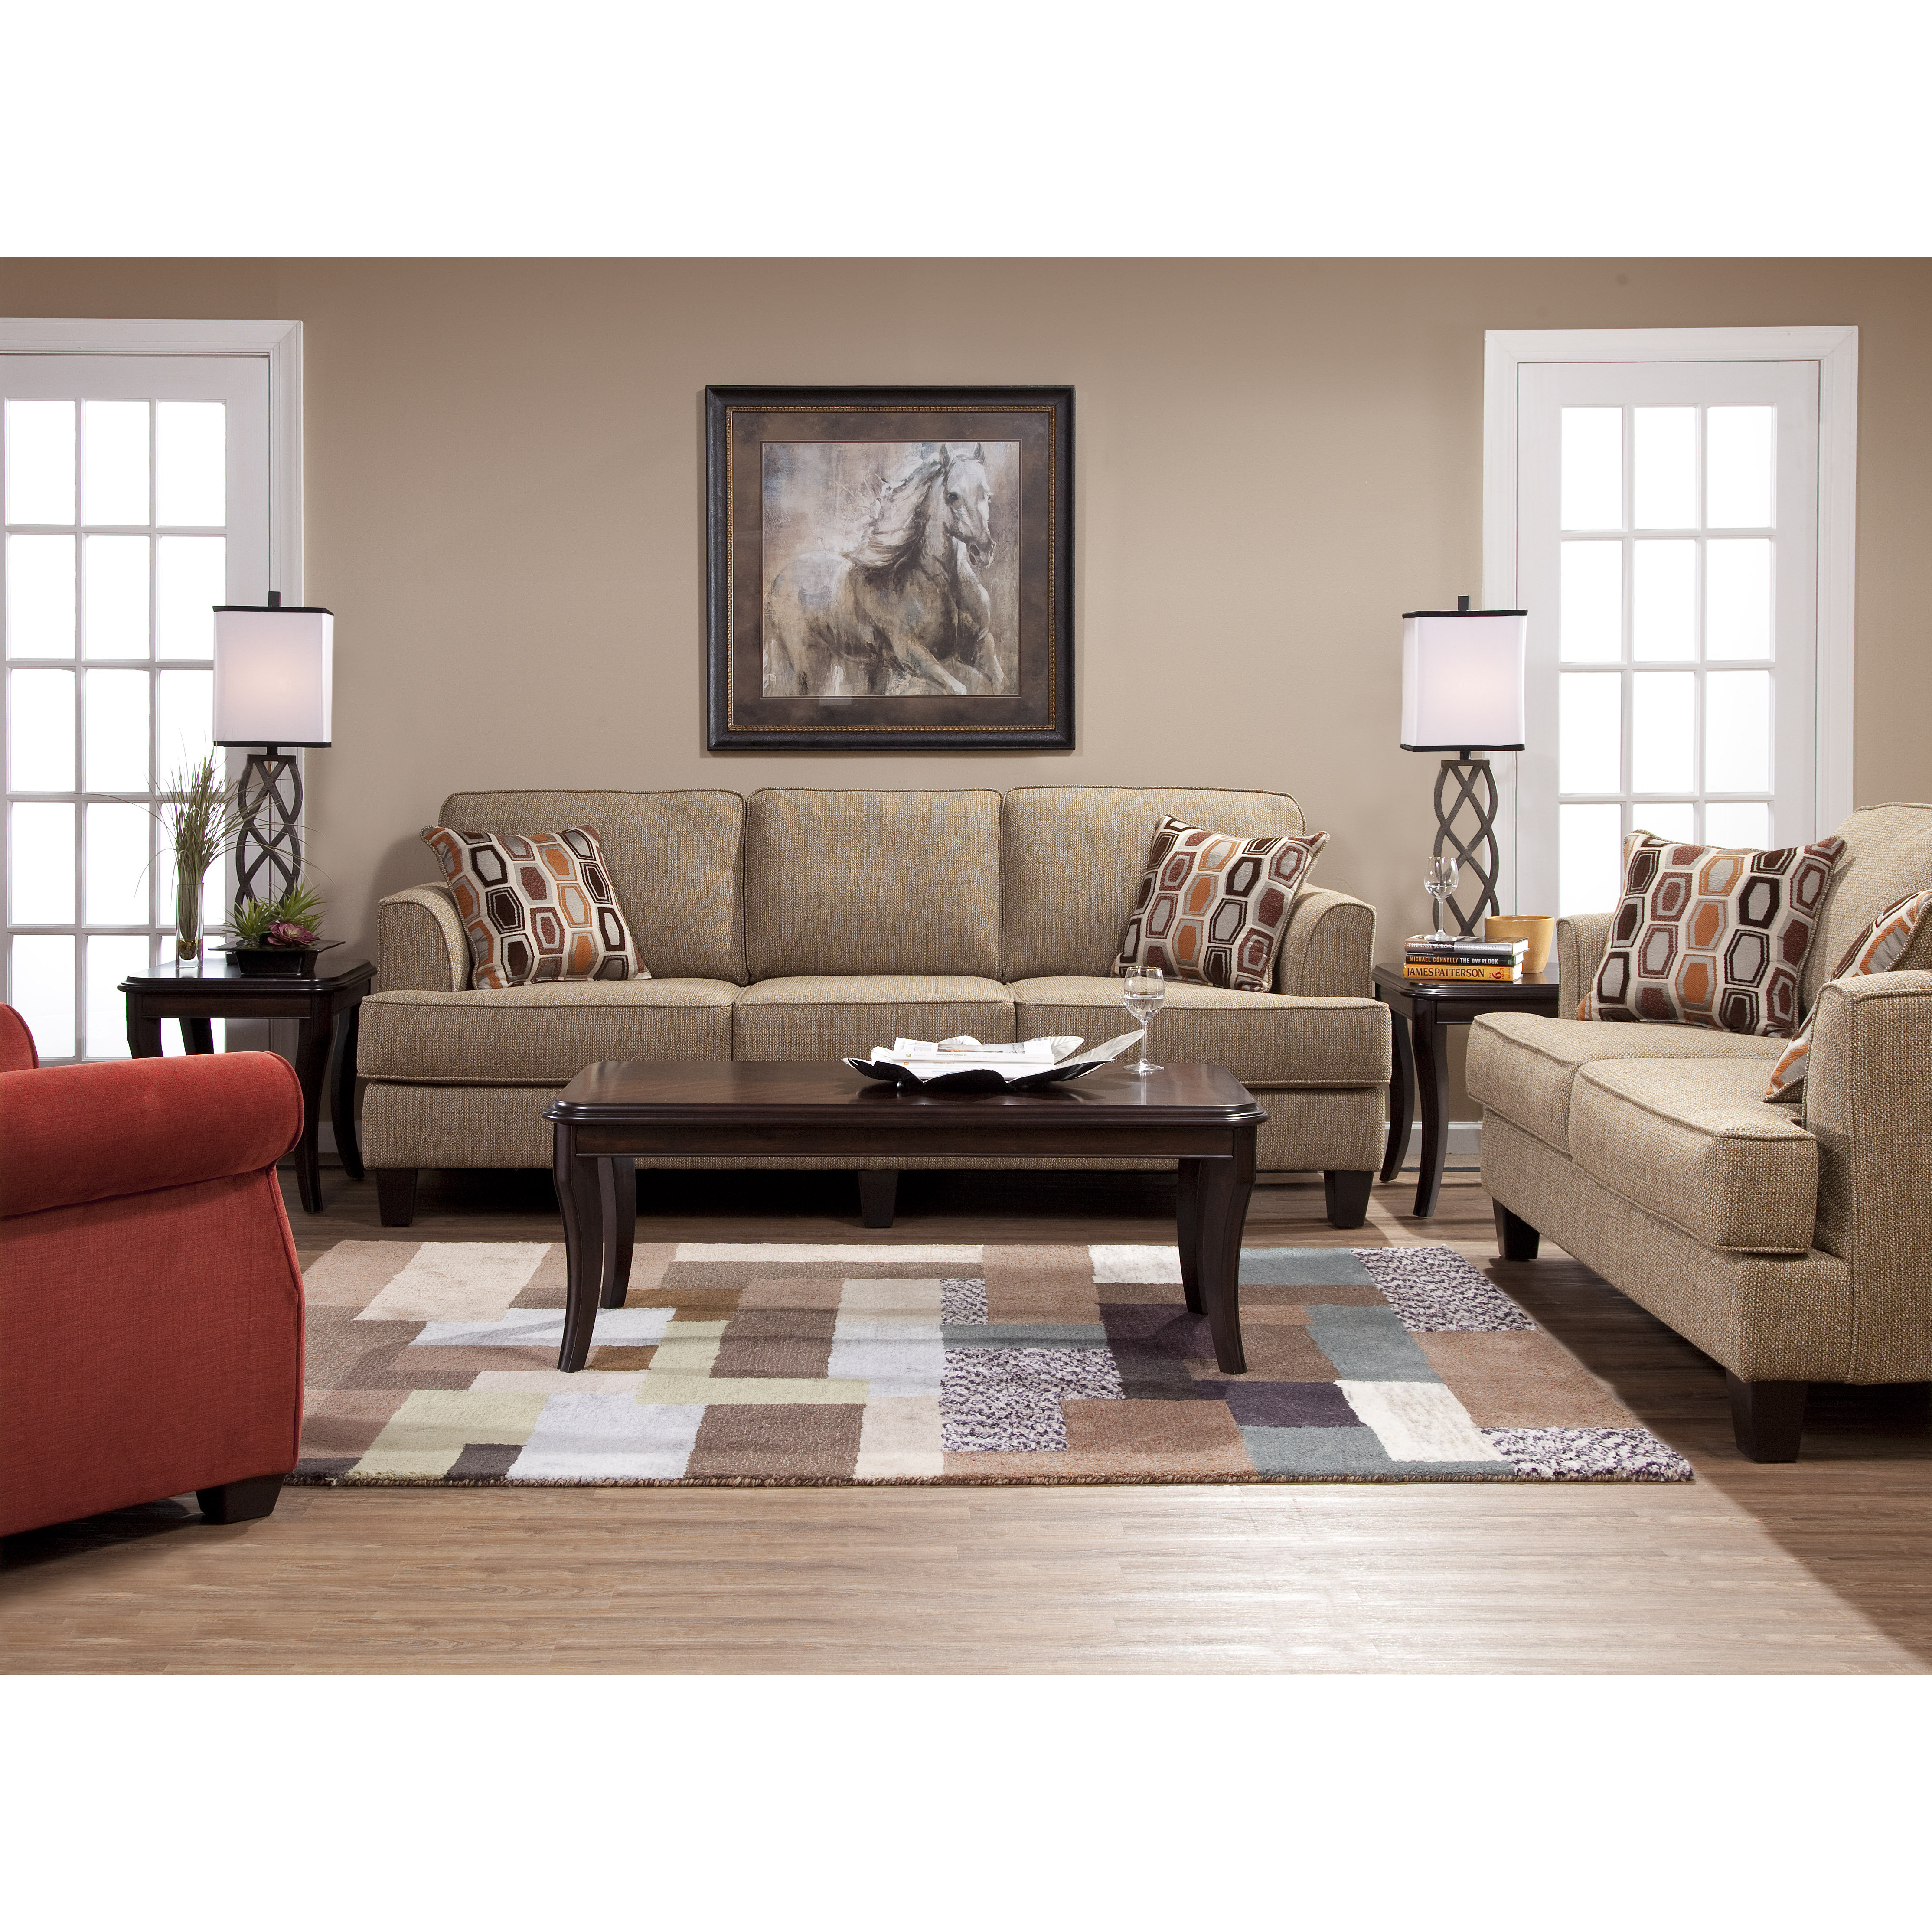 Red Barrel Studio Serta Upholstery Dallas Living Room Collection  Reviews  Wayfair